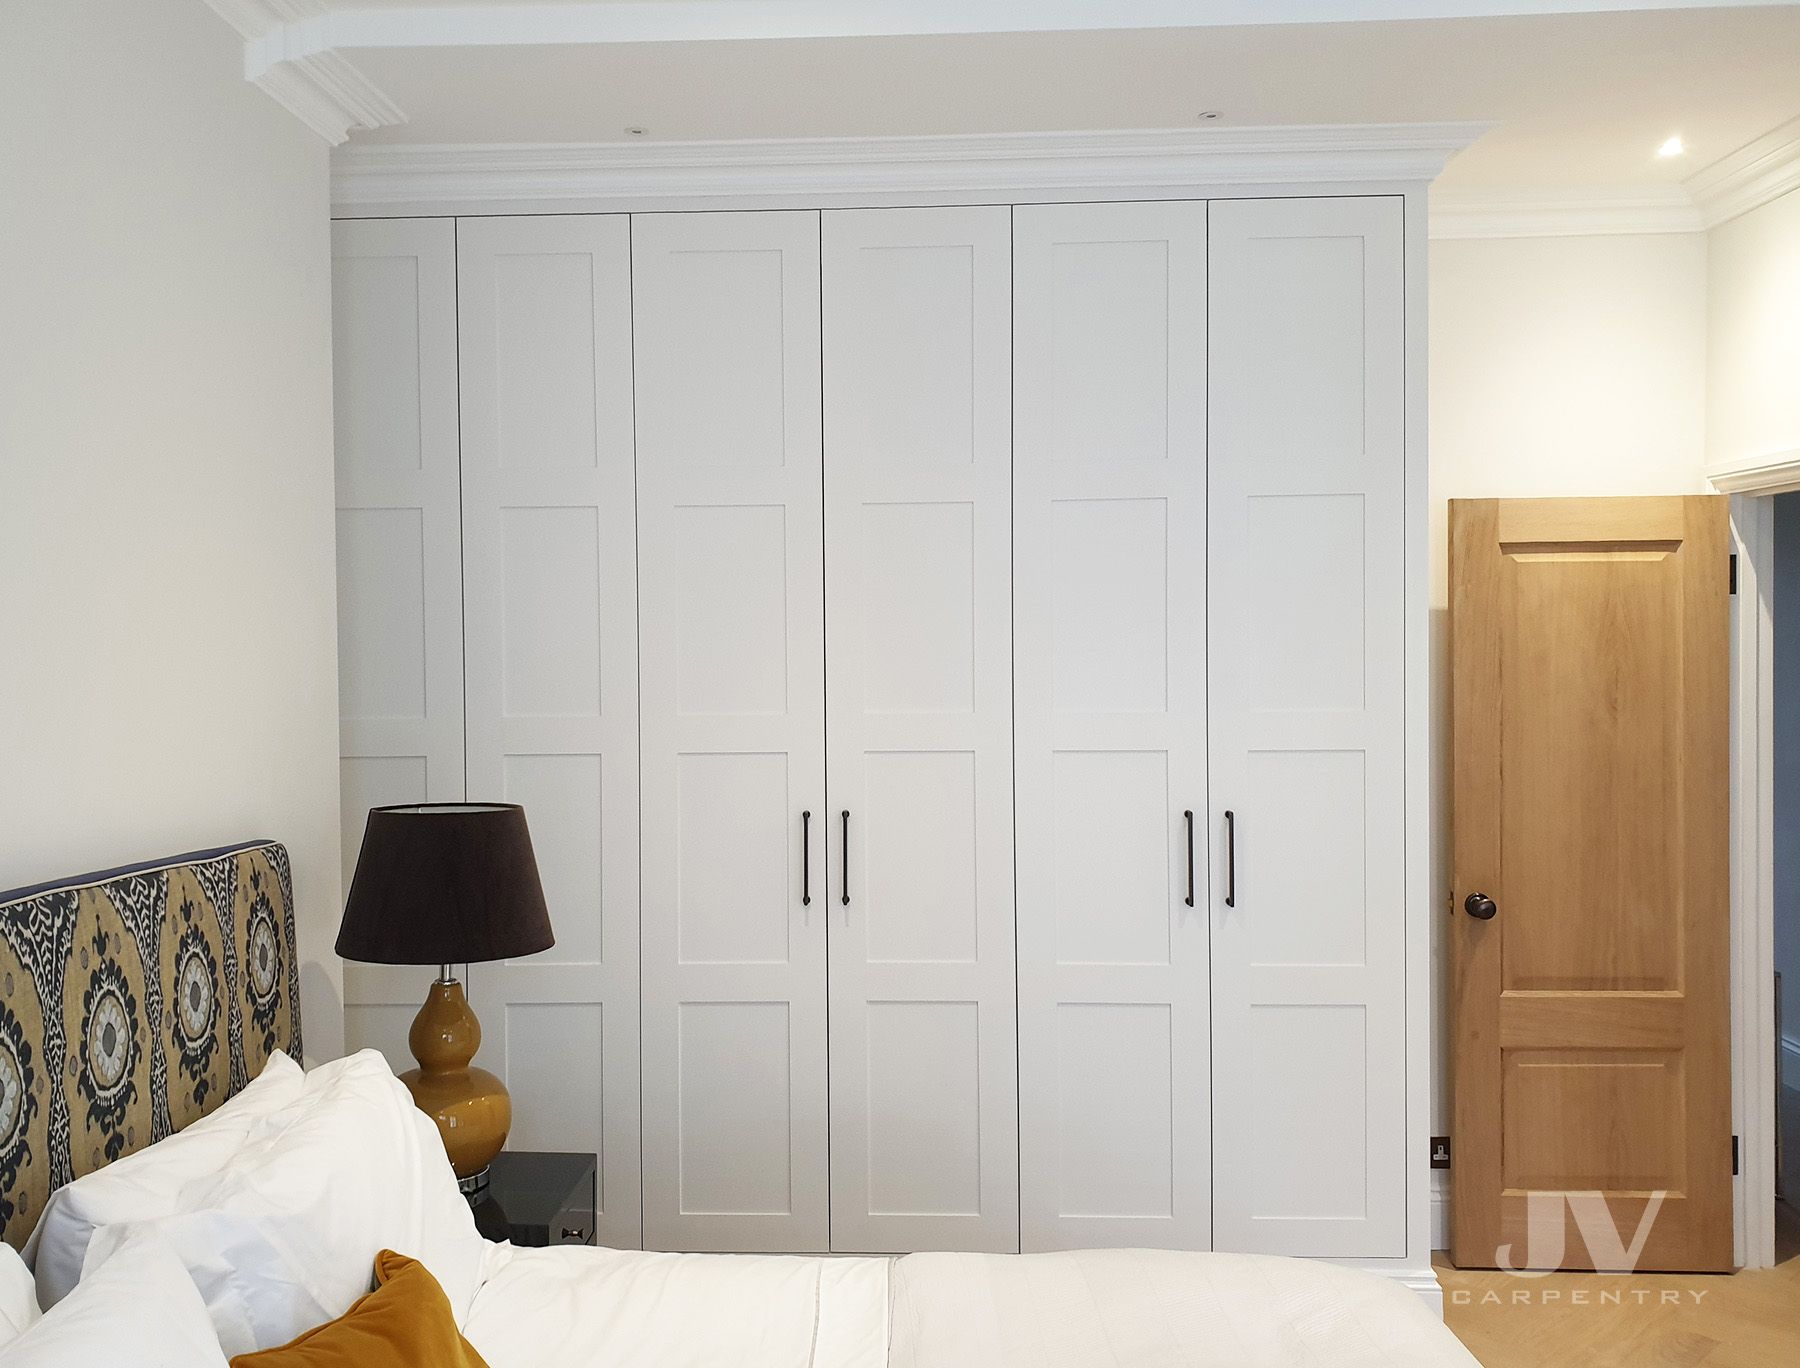 Fitted Wardrobes | Bespoke Bedroom Furniture | Jv Carpentry For Bedroom Wardrobes (Photo 5 of 15)